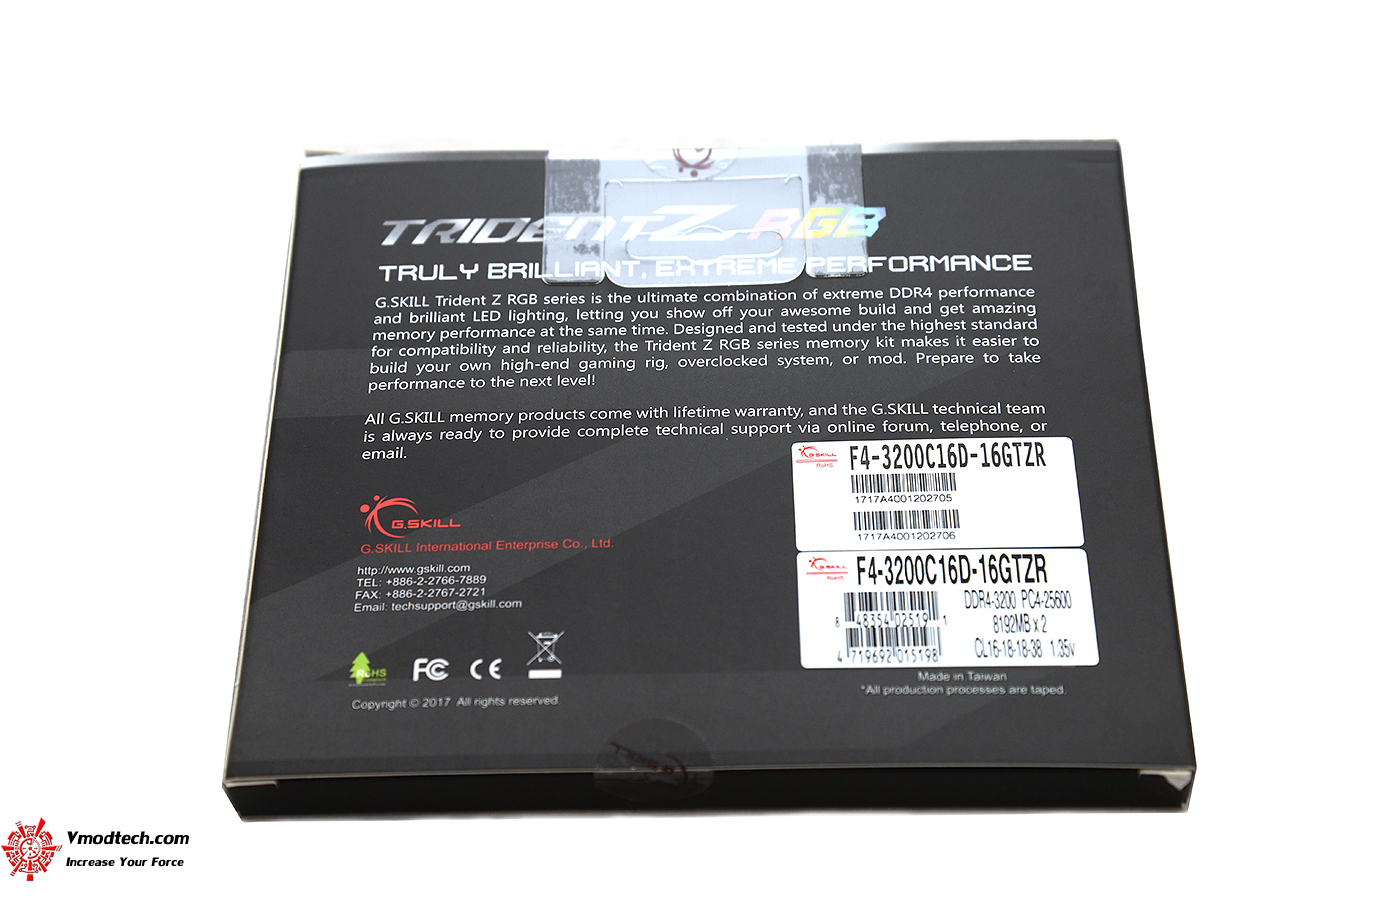 dsc 8109 G.SKILL Trident Z RGB DDR4 3200 (8X2) 16GB REVIEW